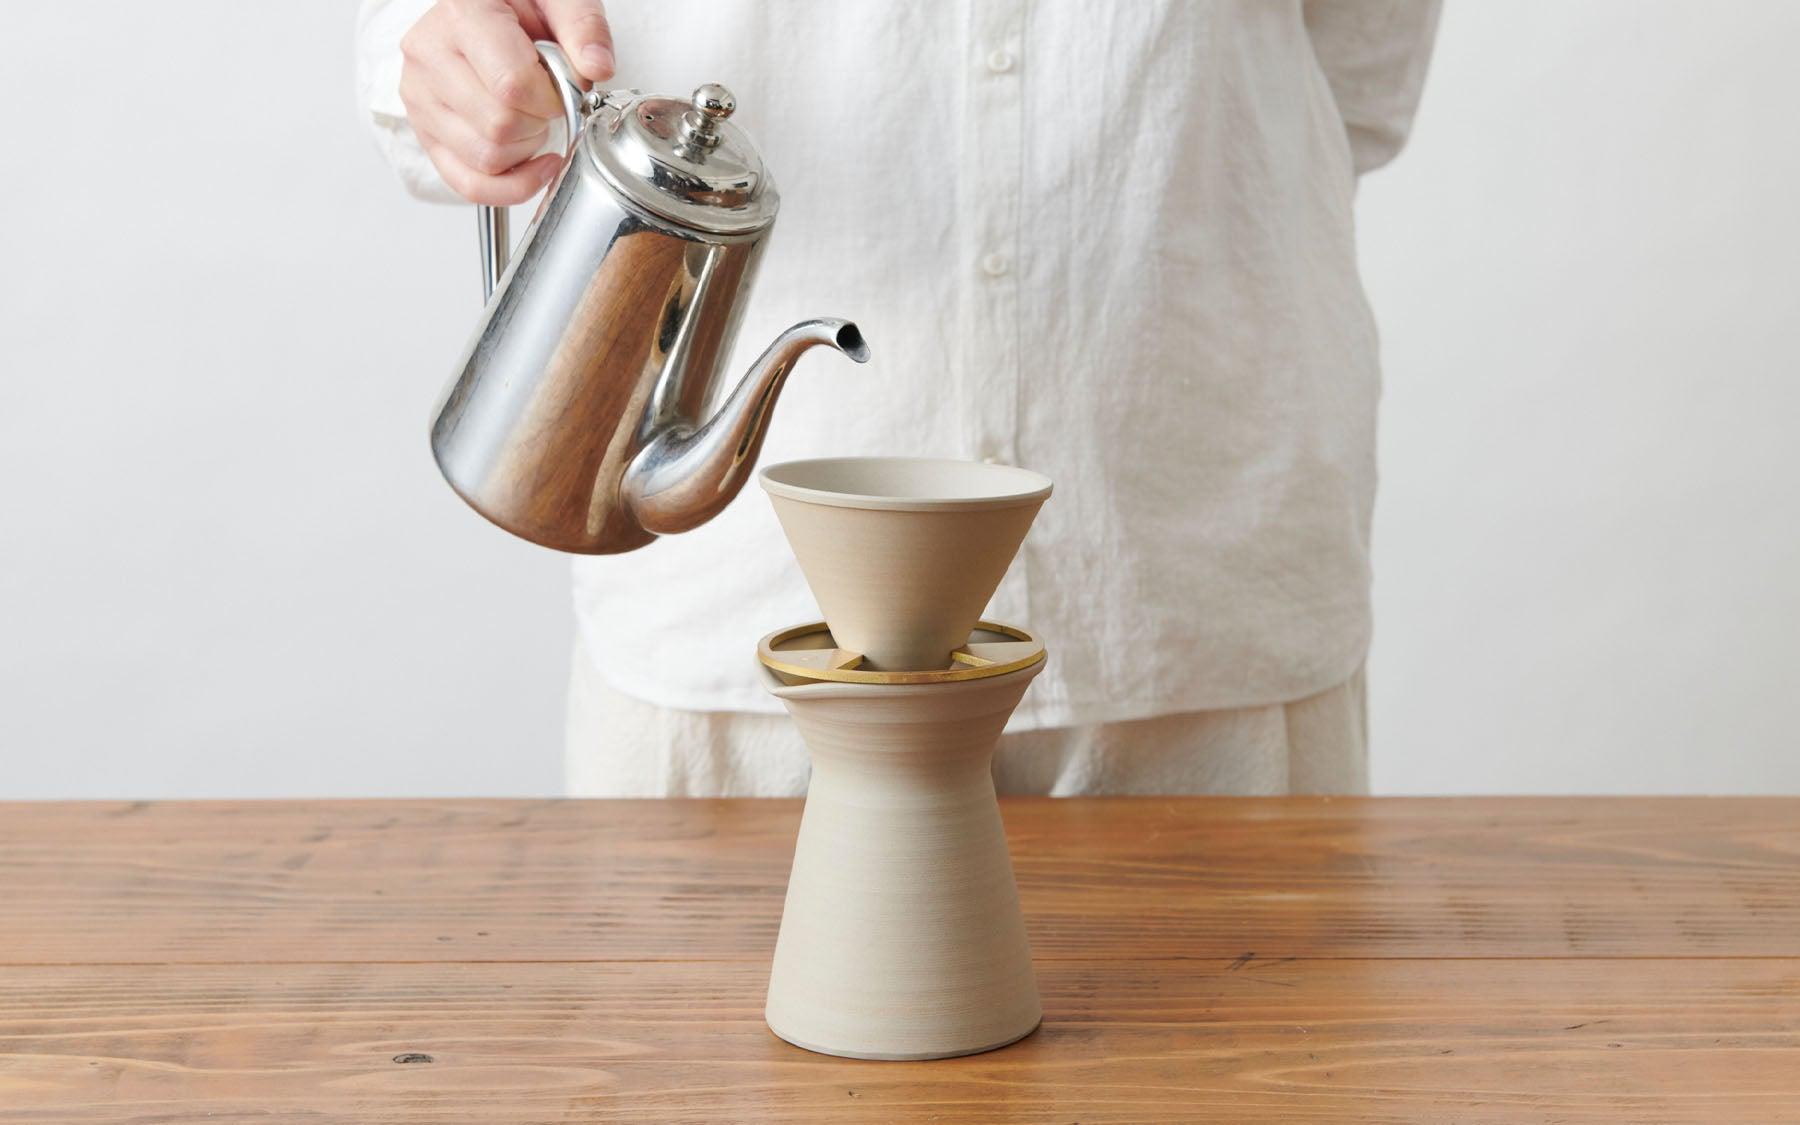 Nankei Touen 咖啡器具 Yakijime 咖啡滴头黄铜支架马克杯